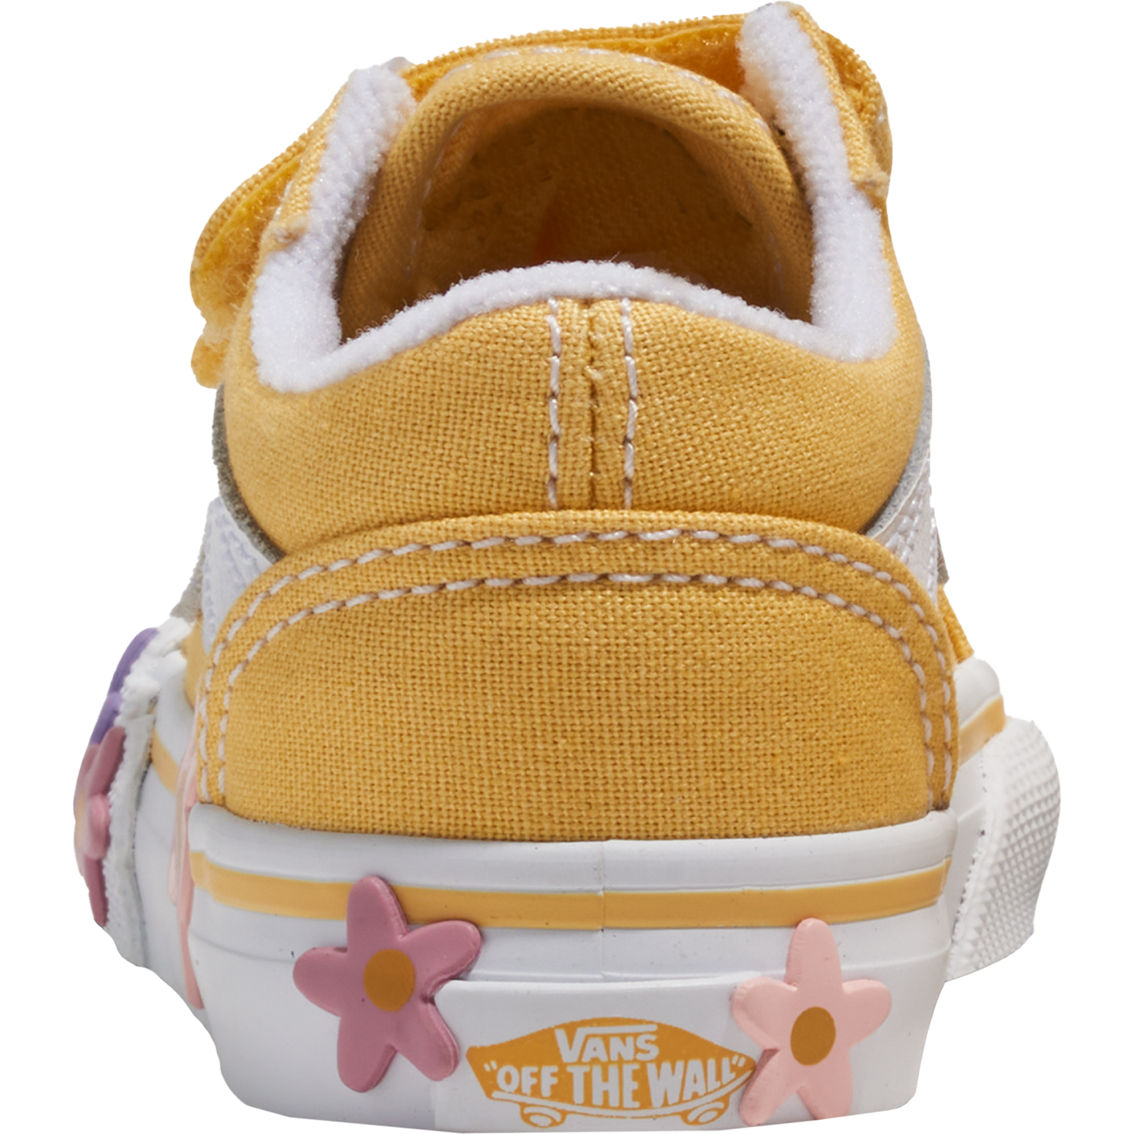 Vans Toddler Girls Old Skool V Flower Yellow Sneakers - Image 4 of 4